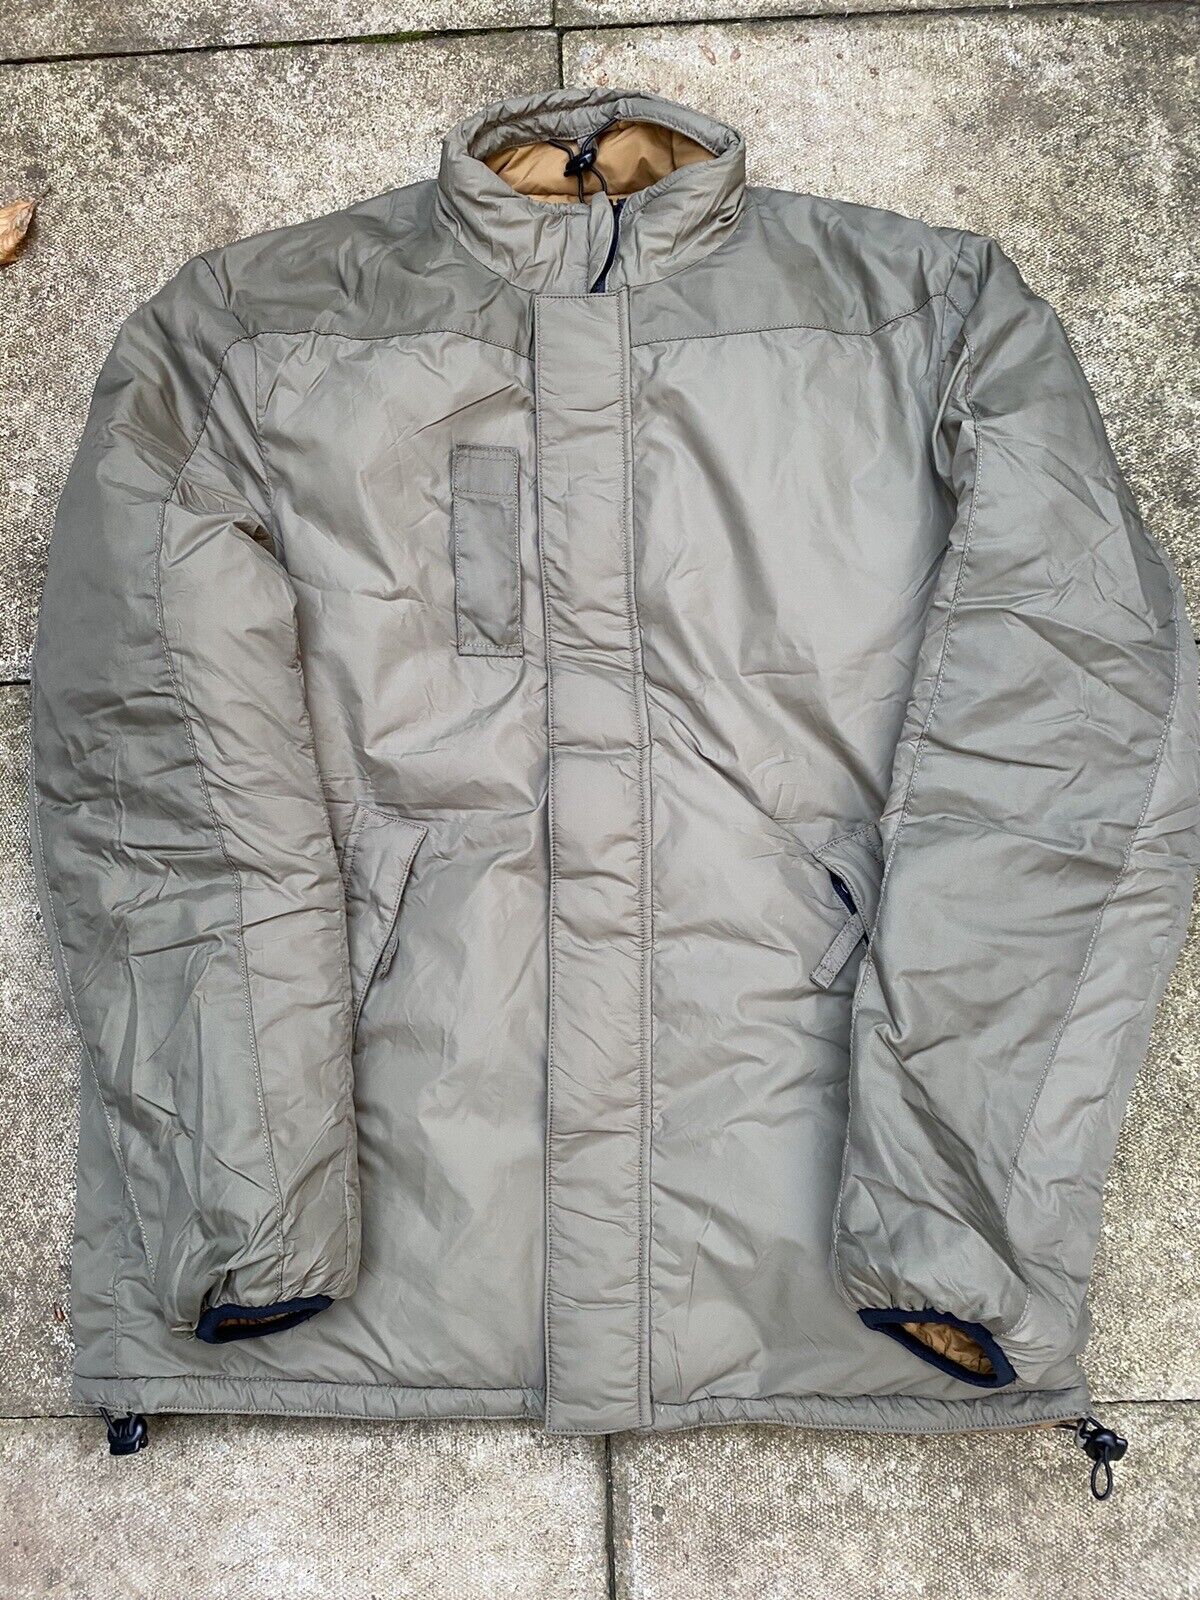 New Genuine Dutch Army Thermal Reversible Softie Jacket & Stuff Sack Large